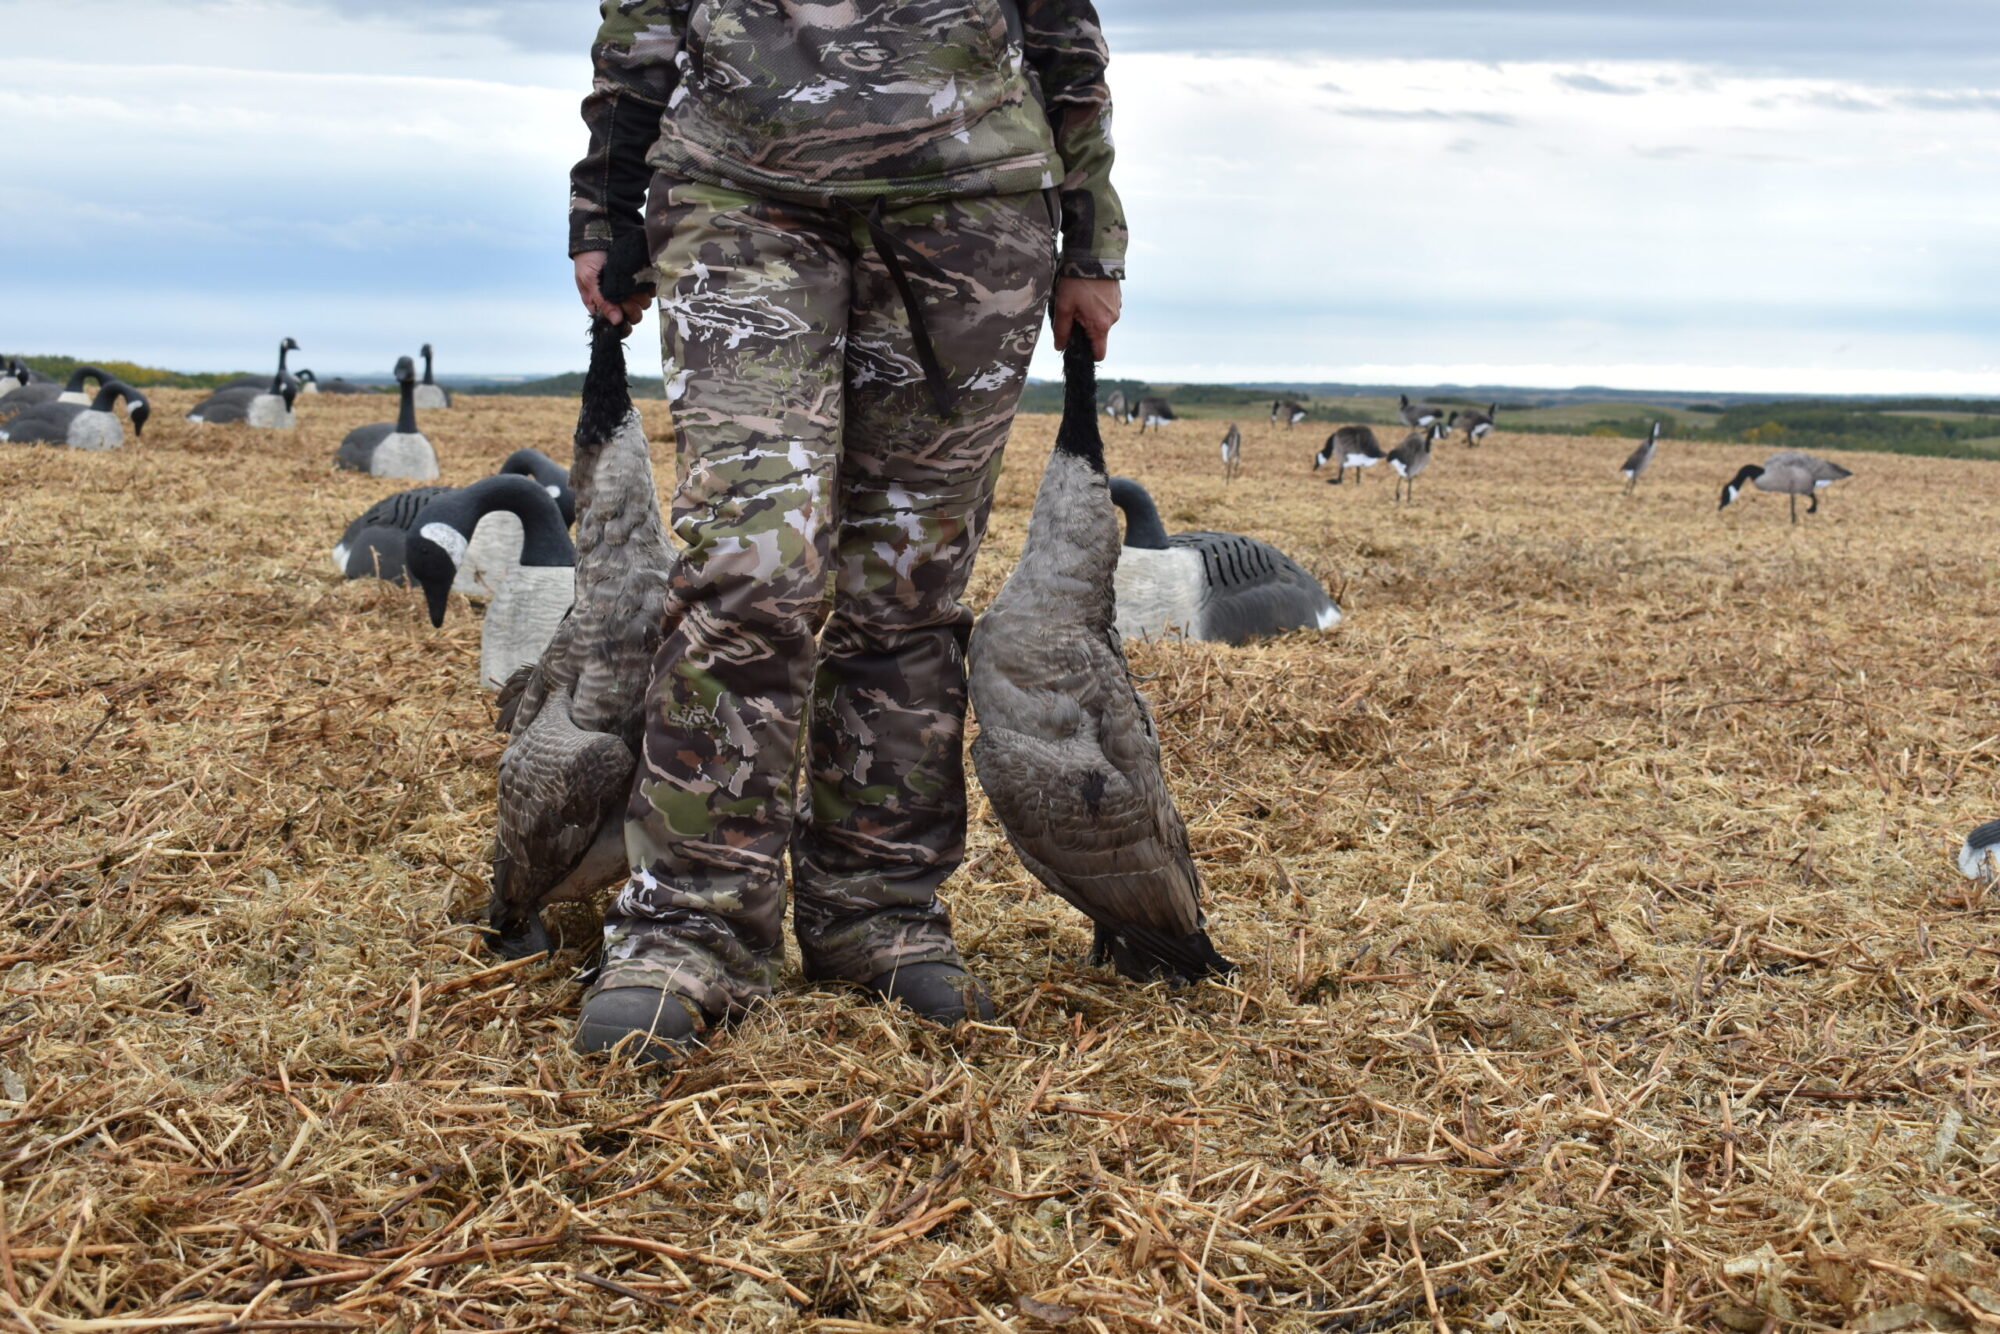 Manitoba Bird Hunting Restrictions to Limit U.S. Hunters